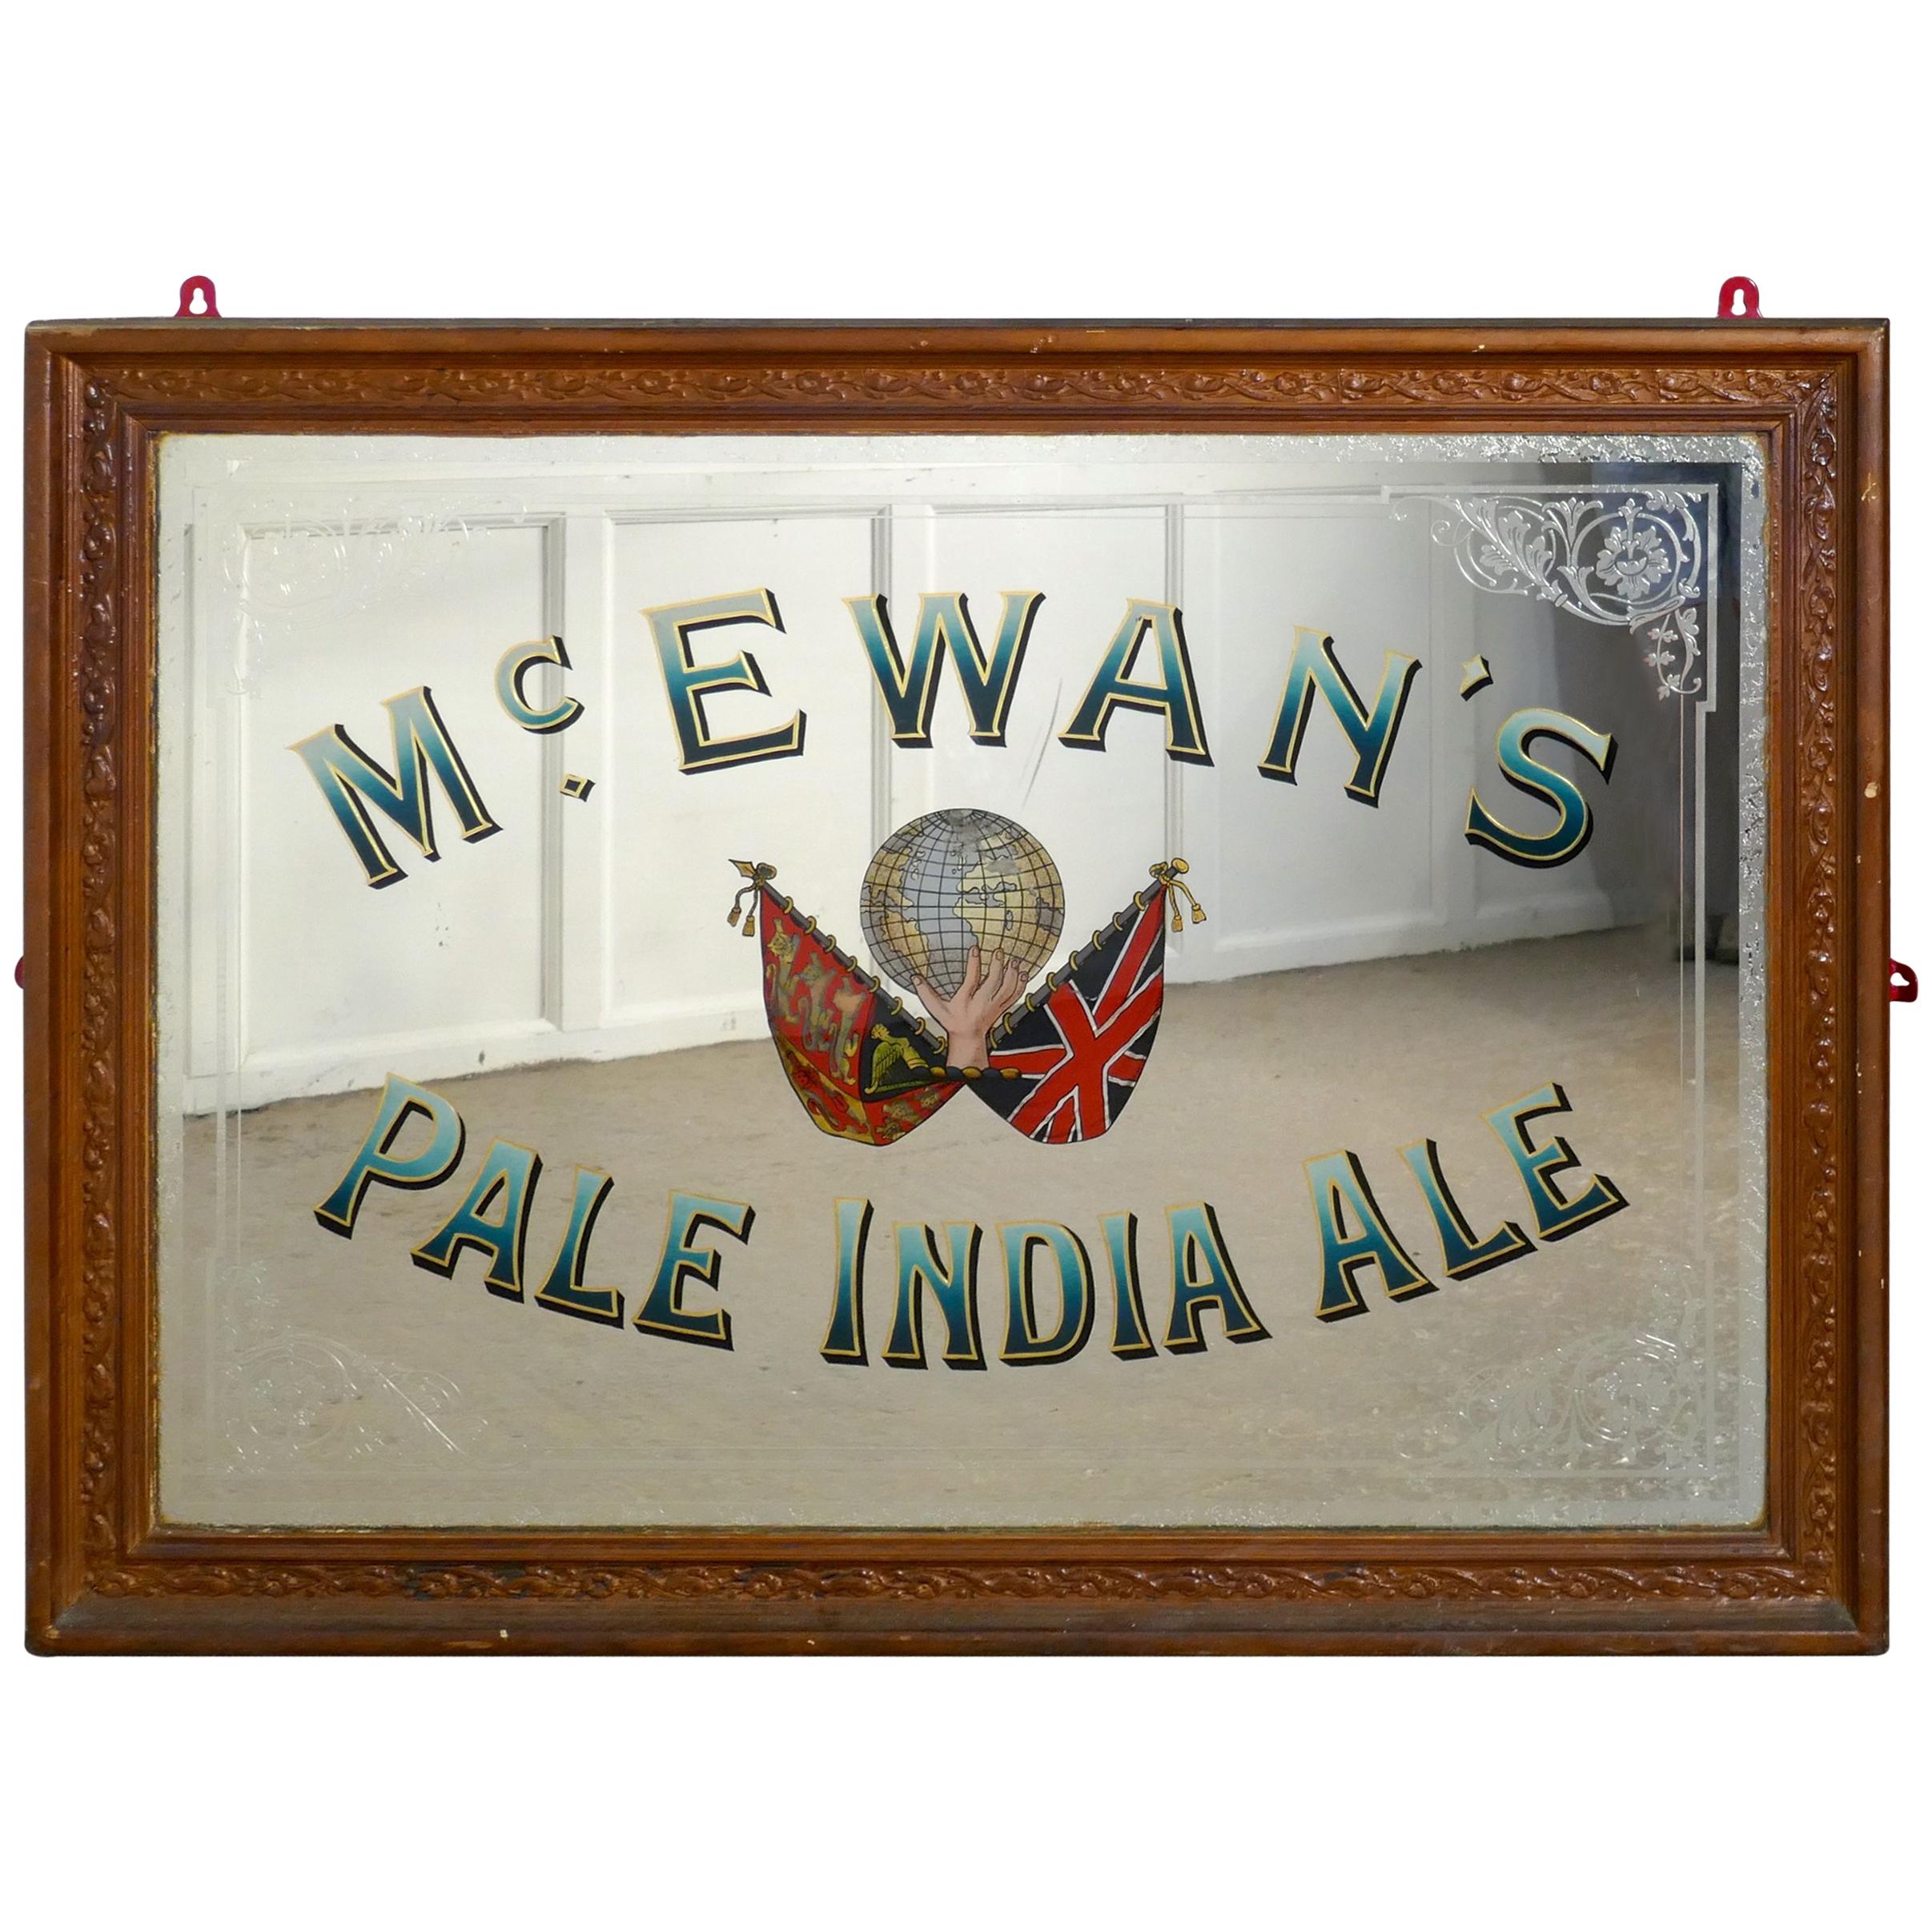 Large Mc Ewan’s Pale India Ale Advertising Mirror, Pub Mirror for Mc Ewans’s